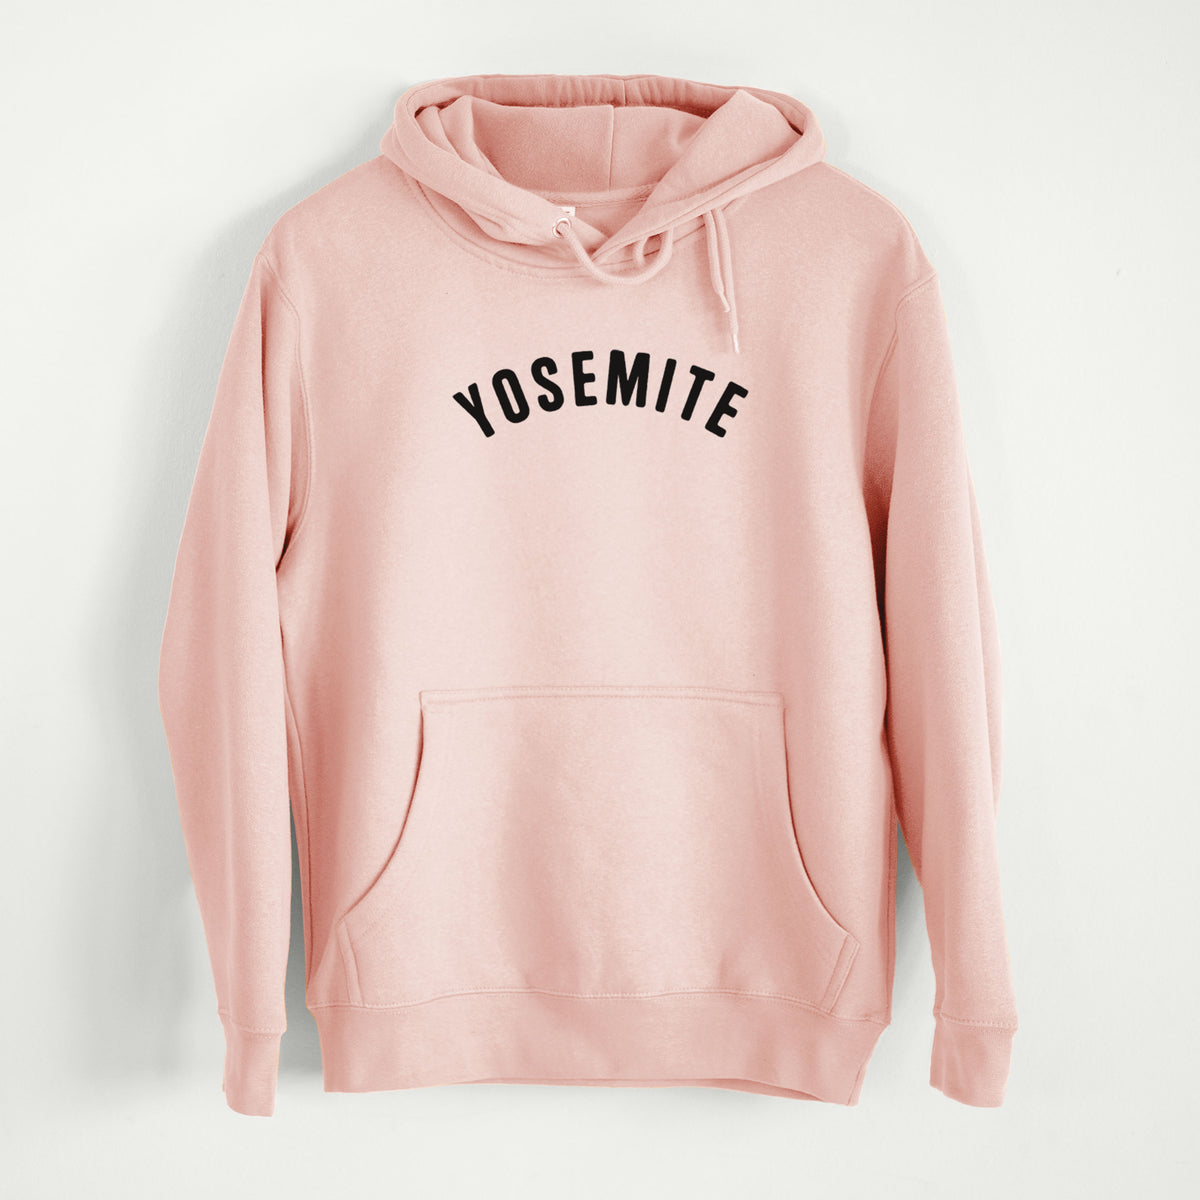 Yosemite  - Mid-Weight Unisex Premium Blend Hoodie